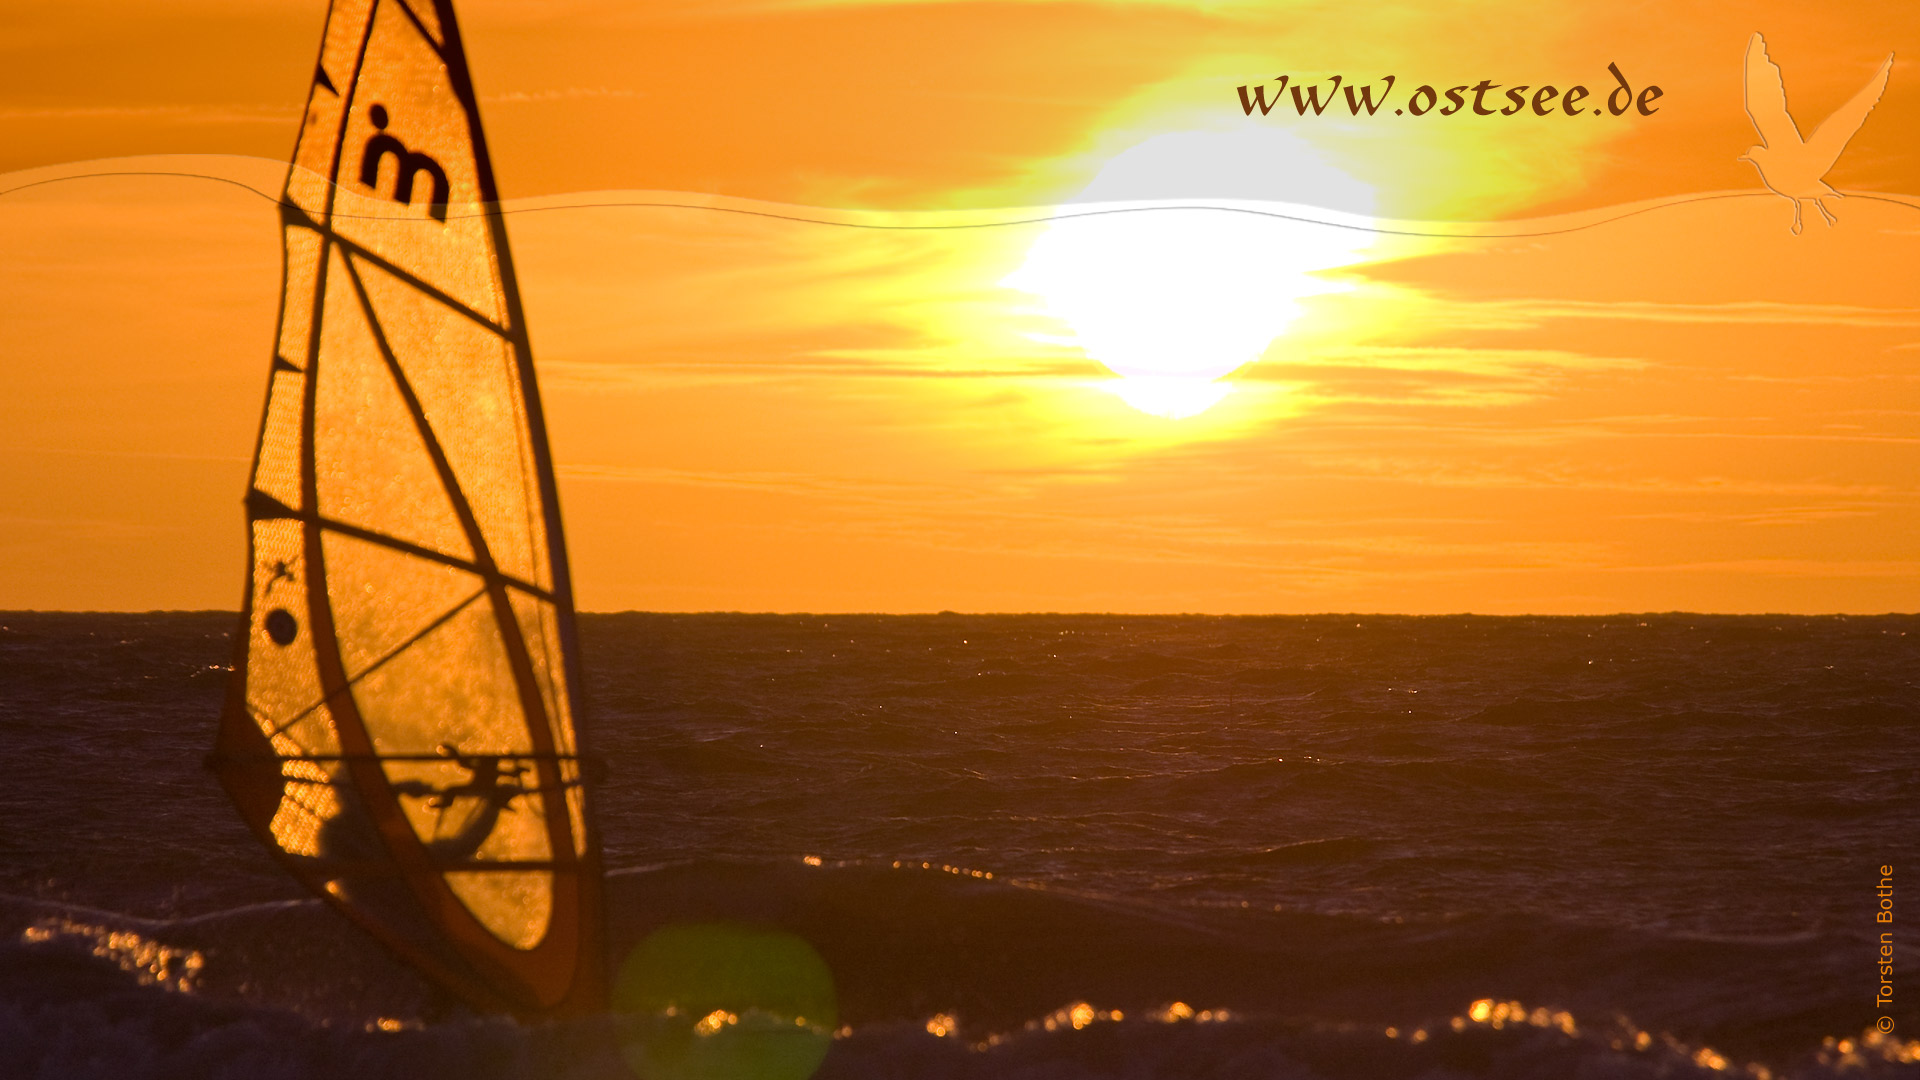 Windsurfen im Sonnenuntergang